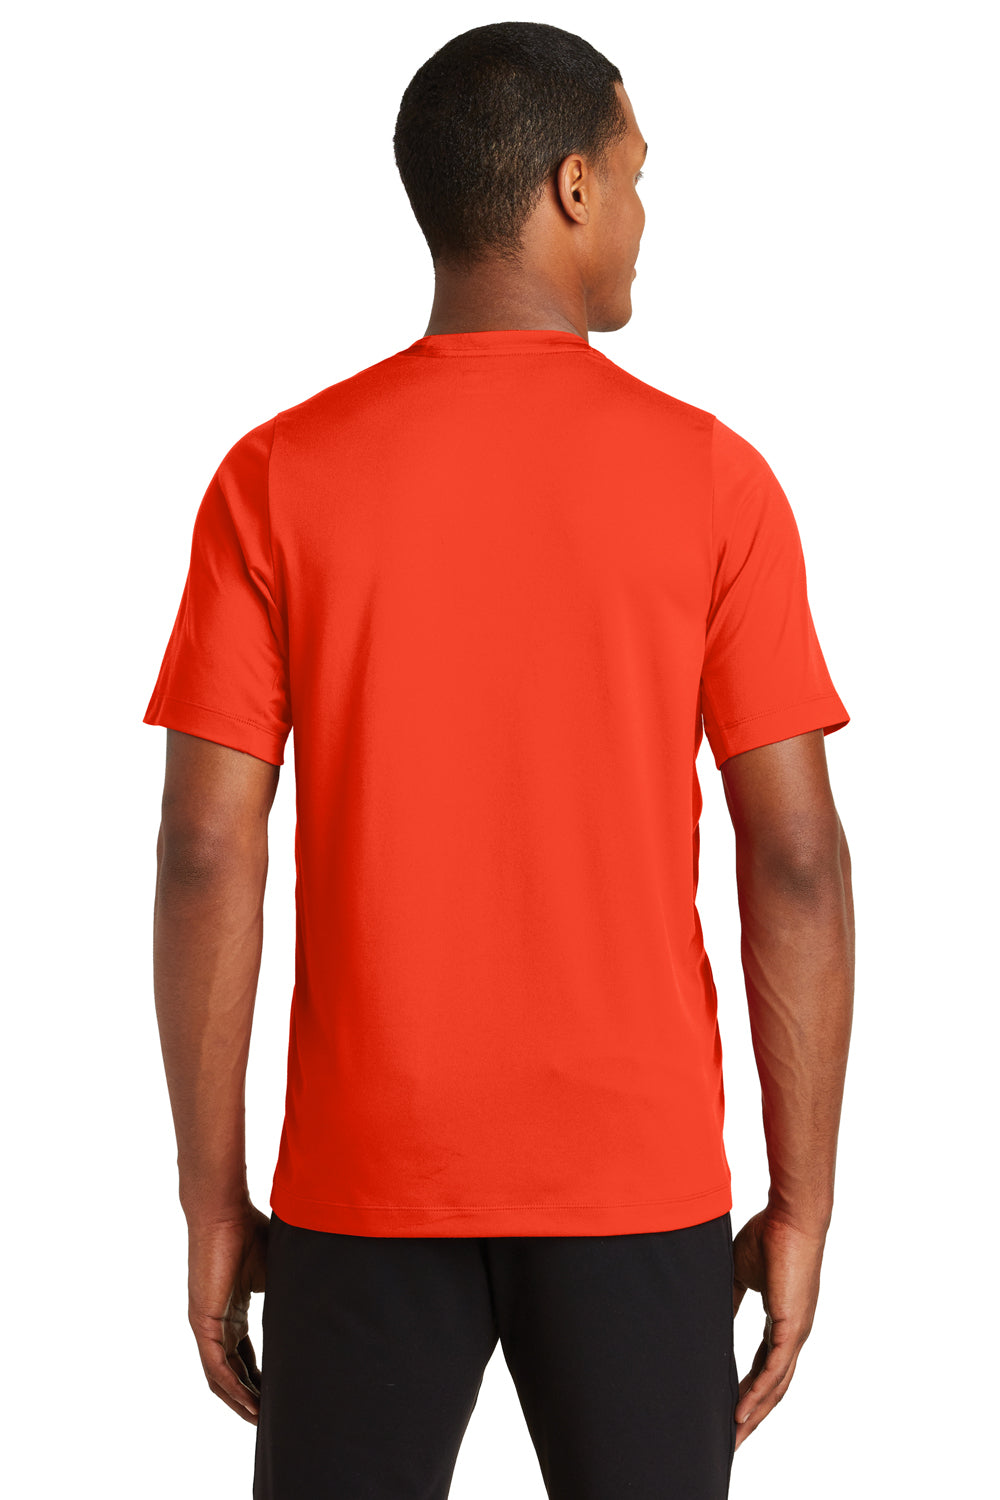 New Era NEA200 Mens Series Performance Jersey Moisture Wicking Short Sleeve Crewneck T-Shirt Orange Back